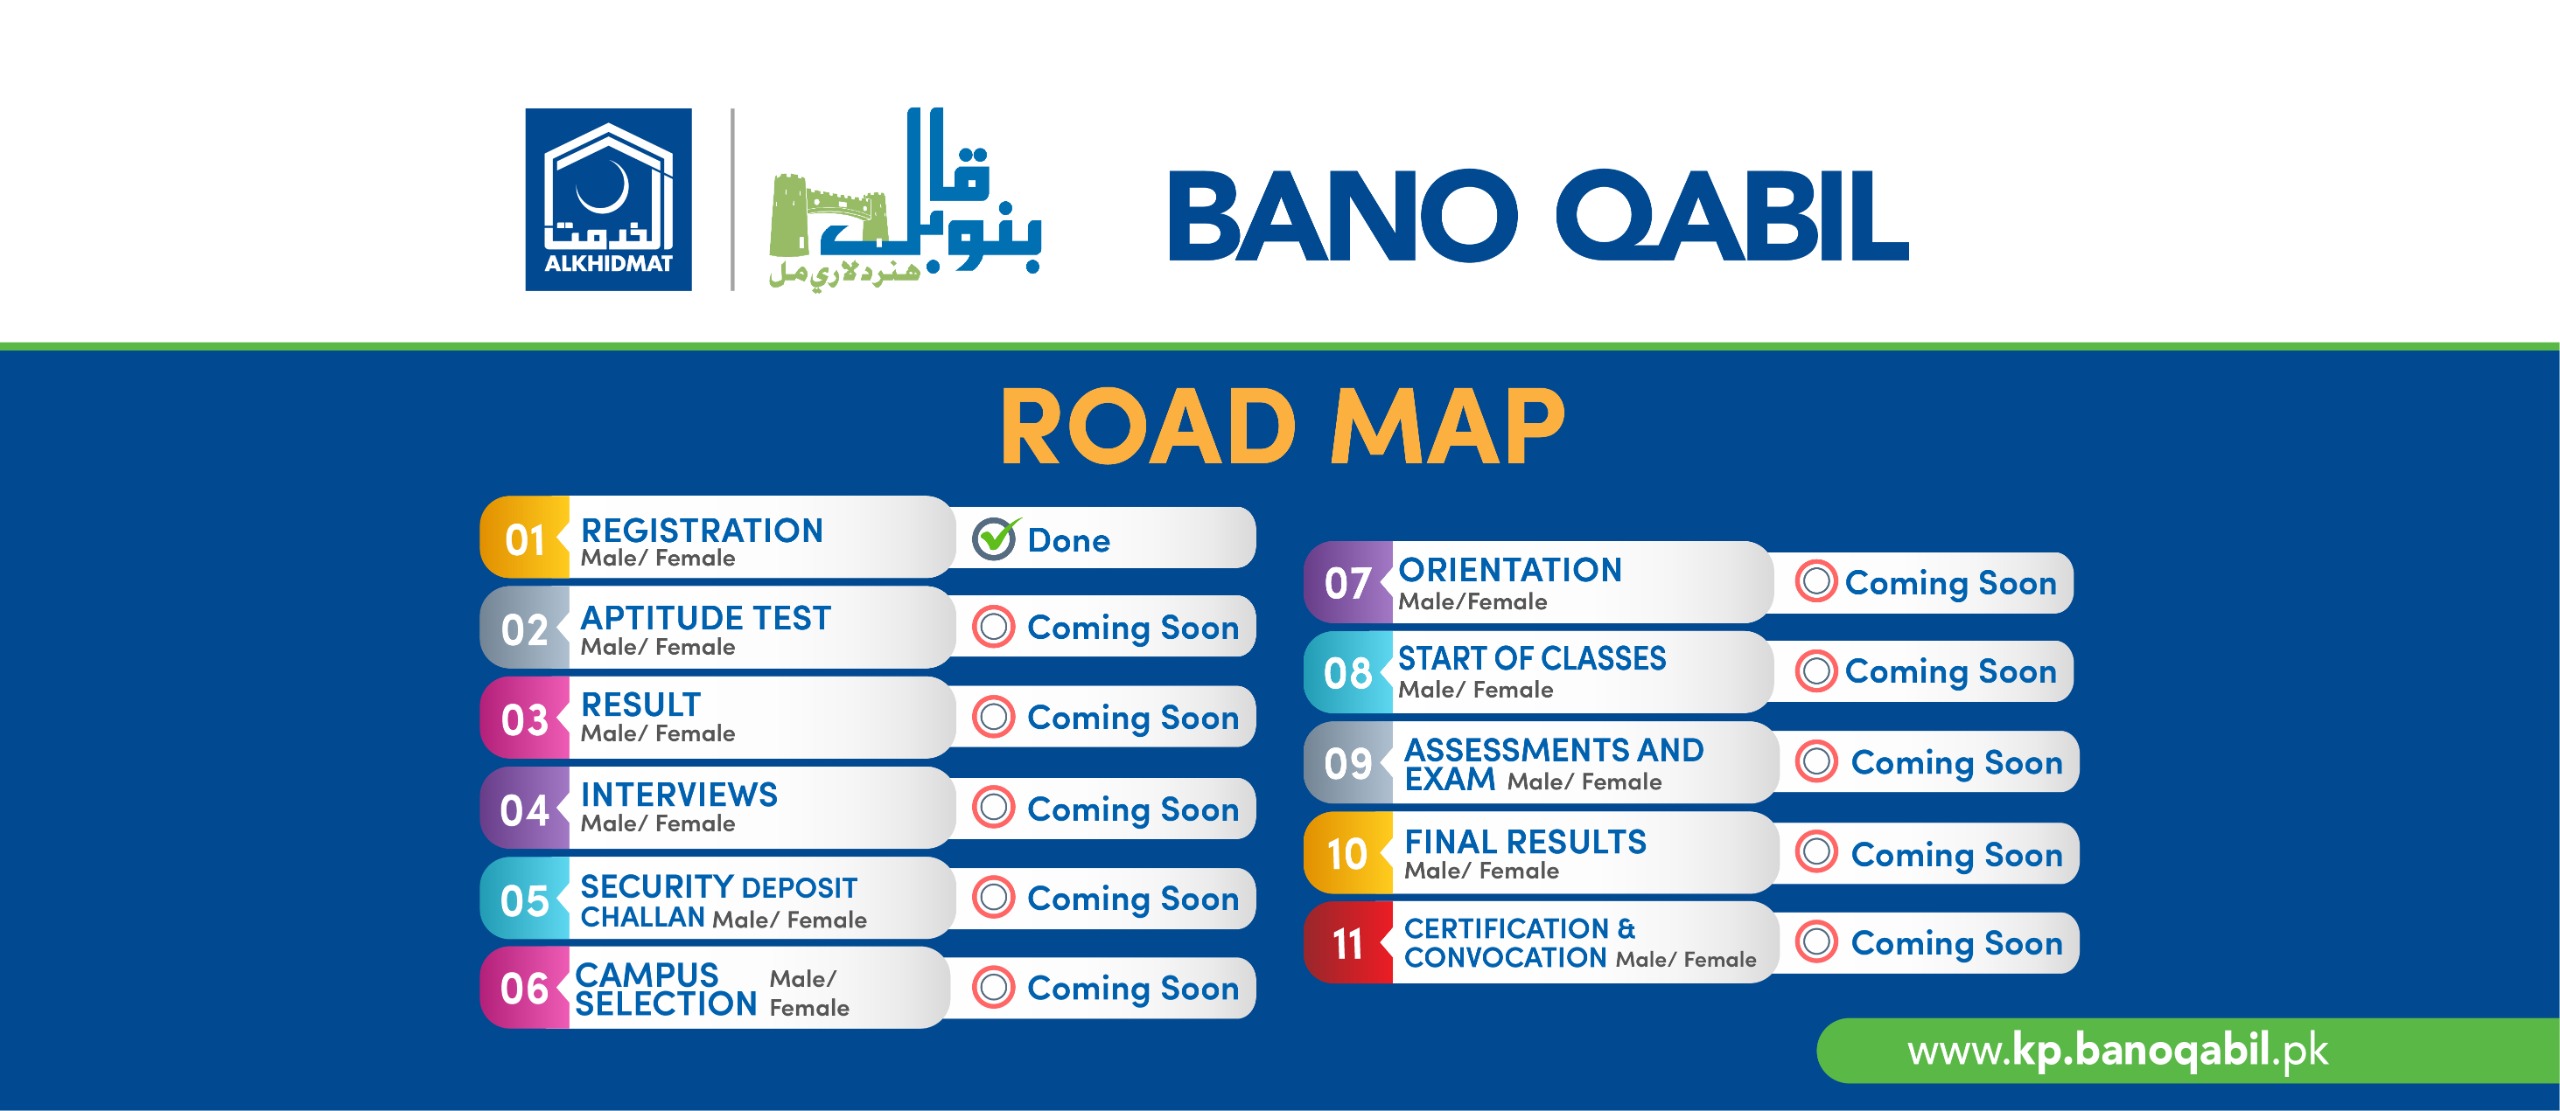 Bano Qabil Road Map